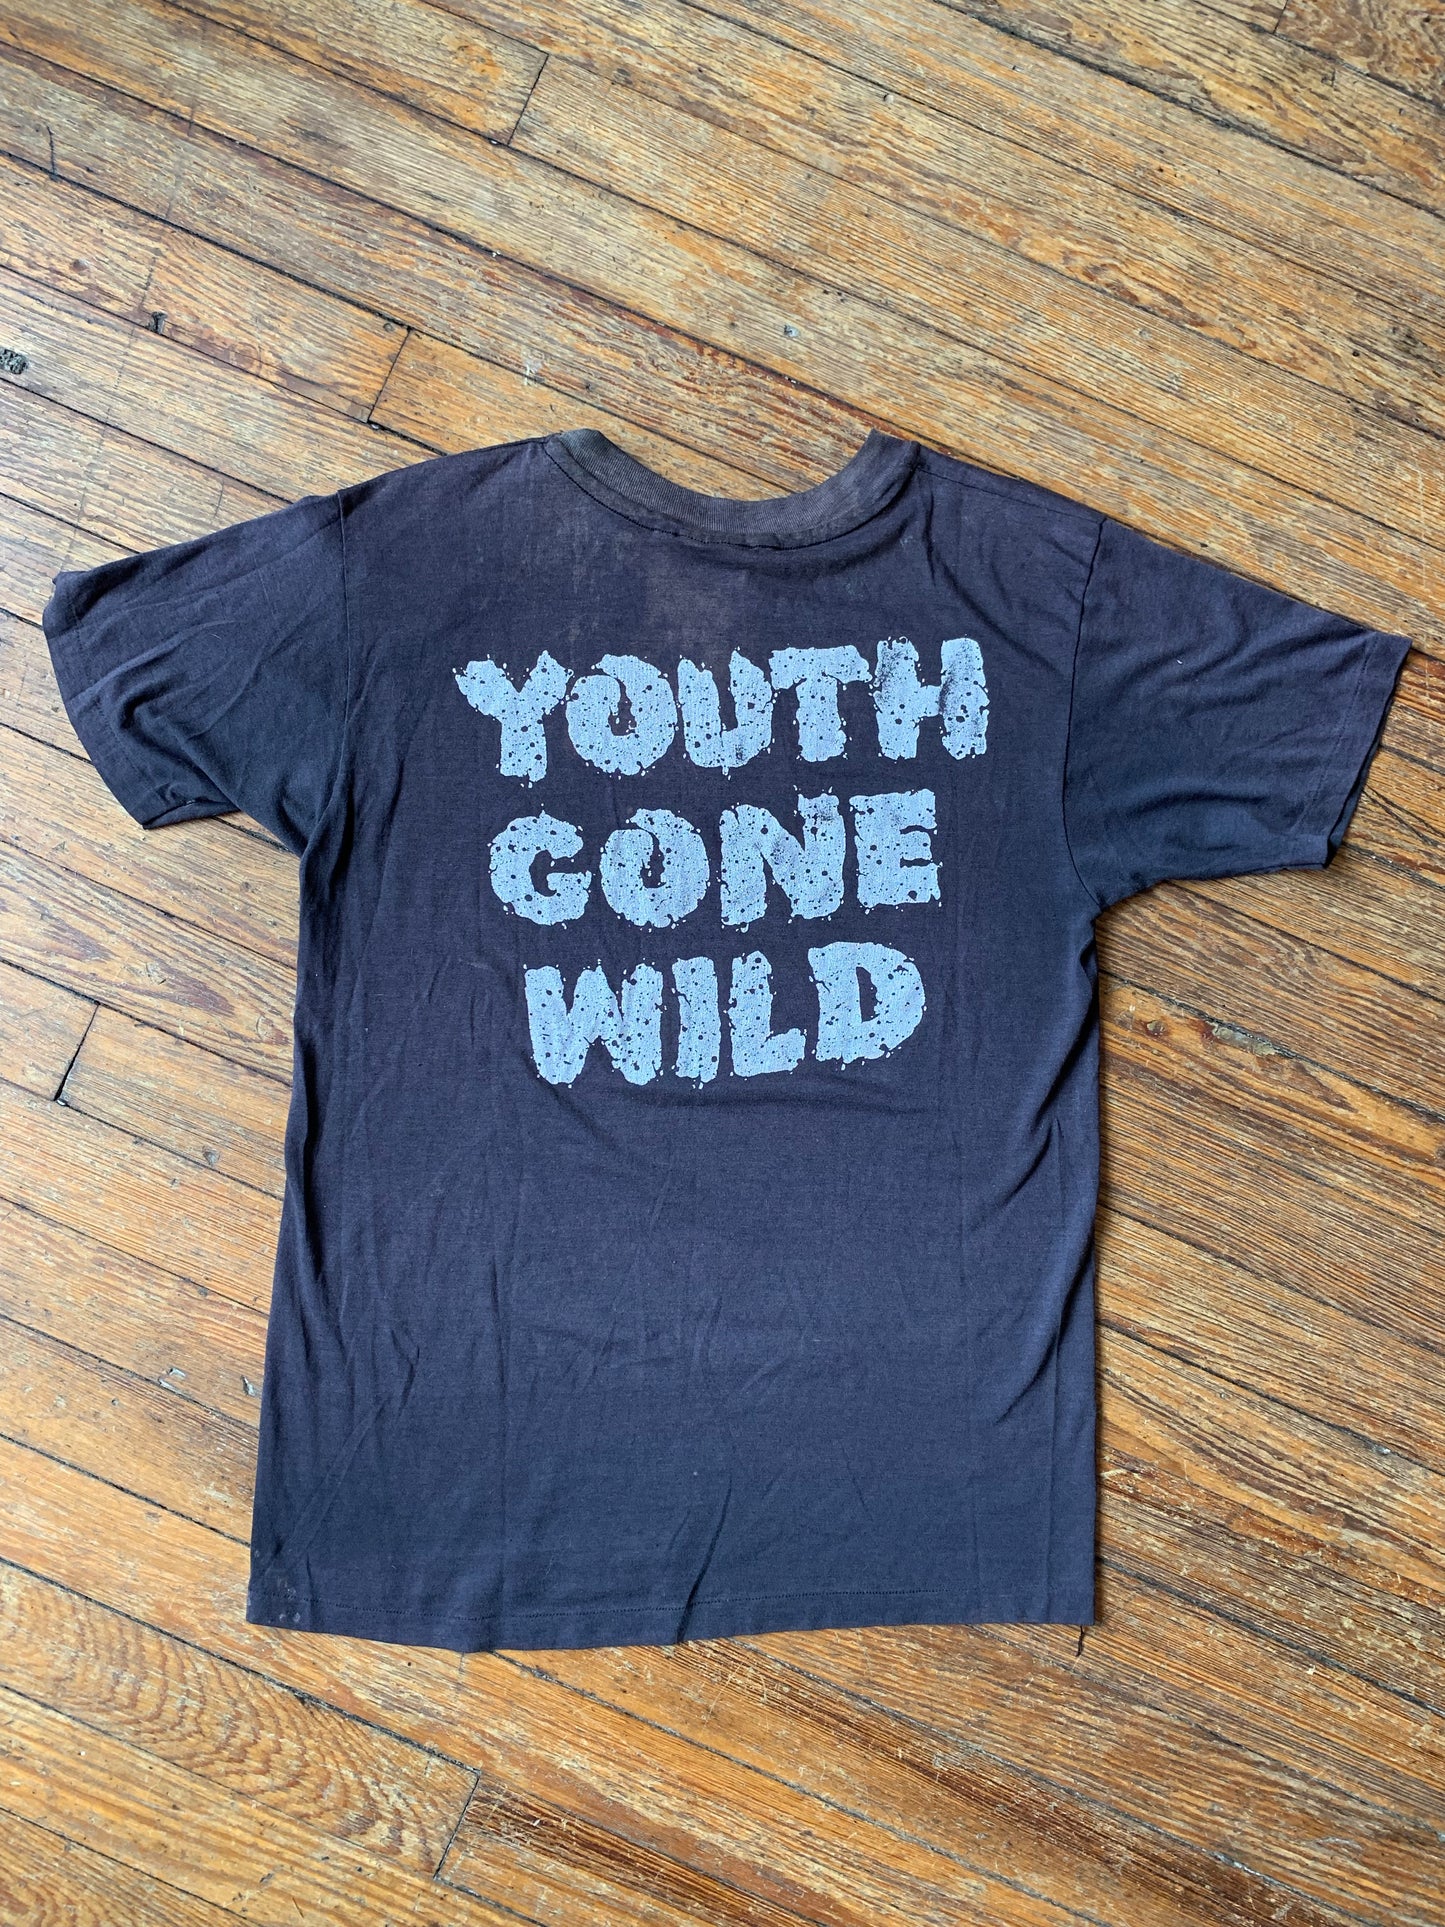 Vintage 1989 Skid Row Youth Gone Wild Tee